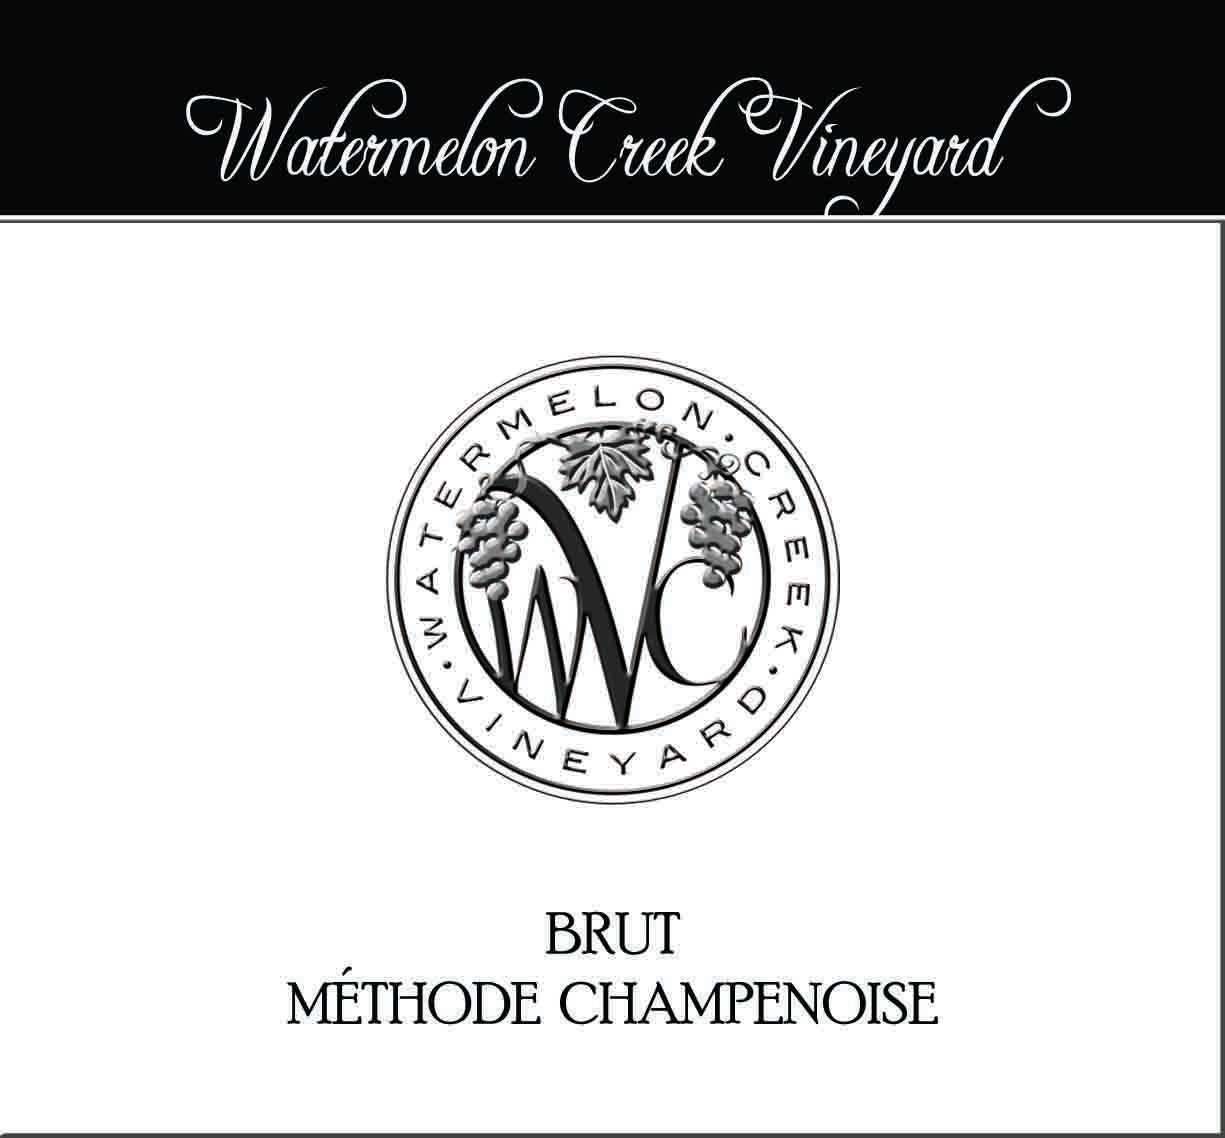 Vacu-vin wine saver - Watermelon Creek Vineyard